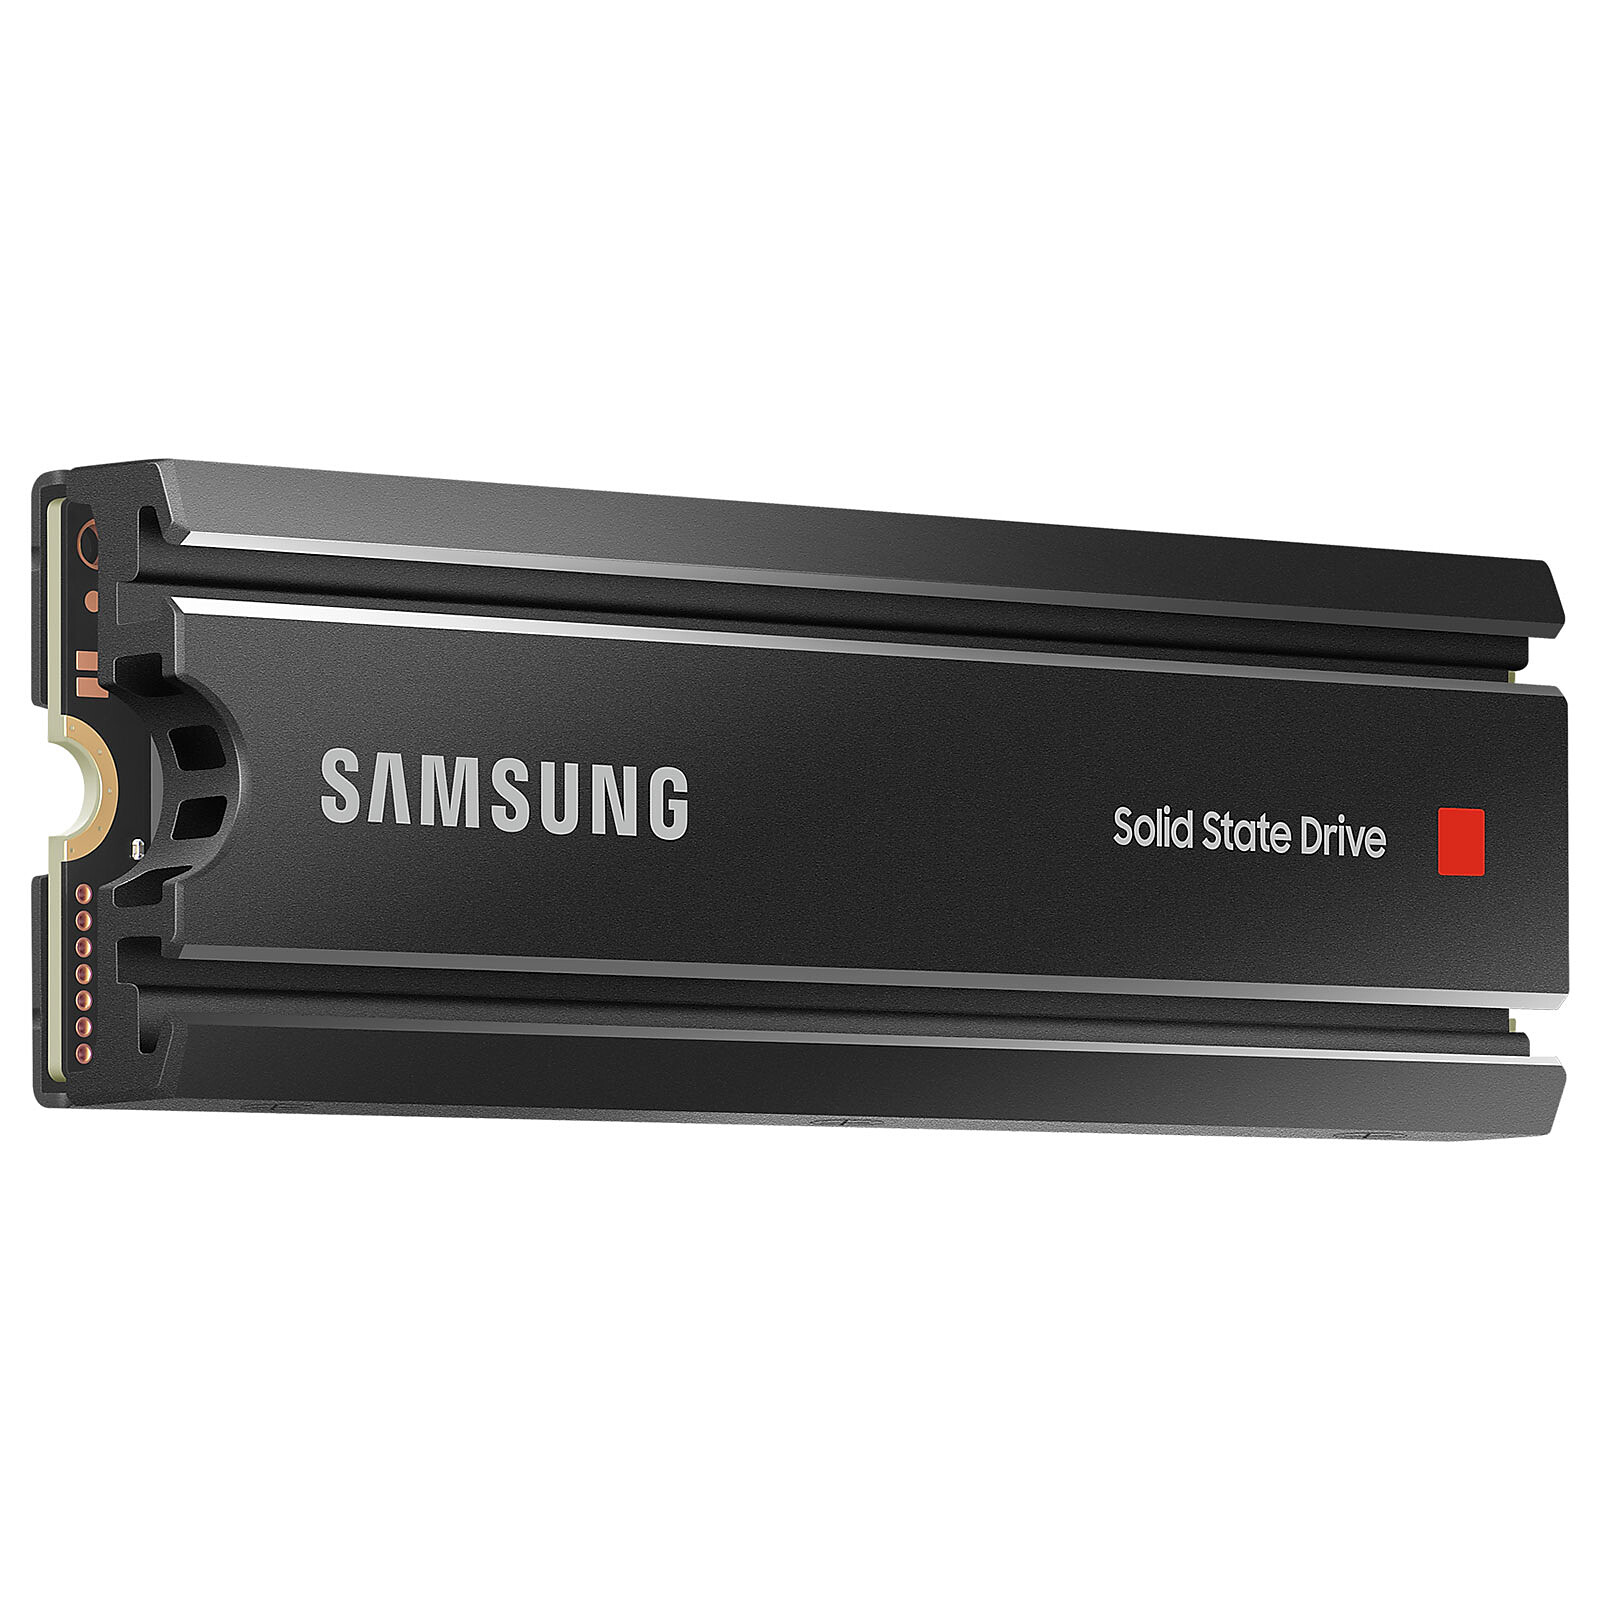 PS5 SSD Performance Test  PS5 SSD VS Samsung 980 Pro M.2 